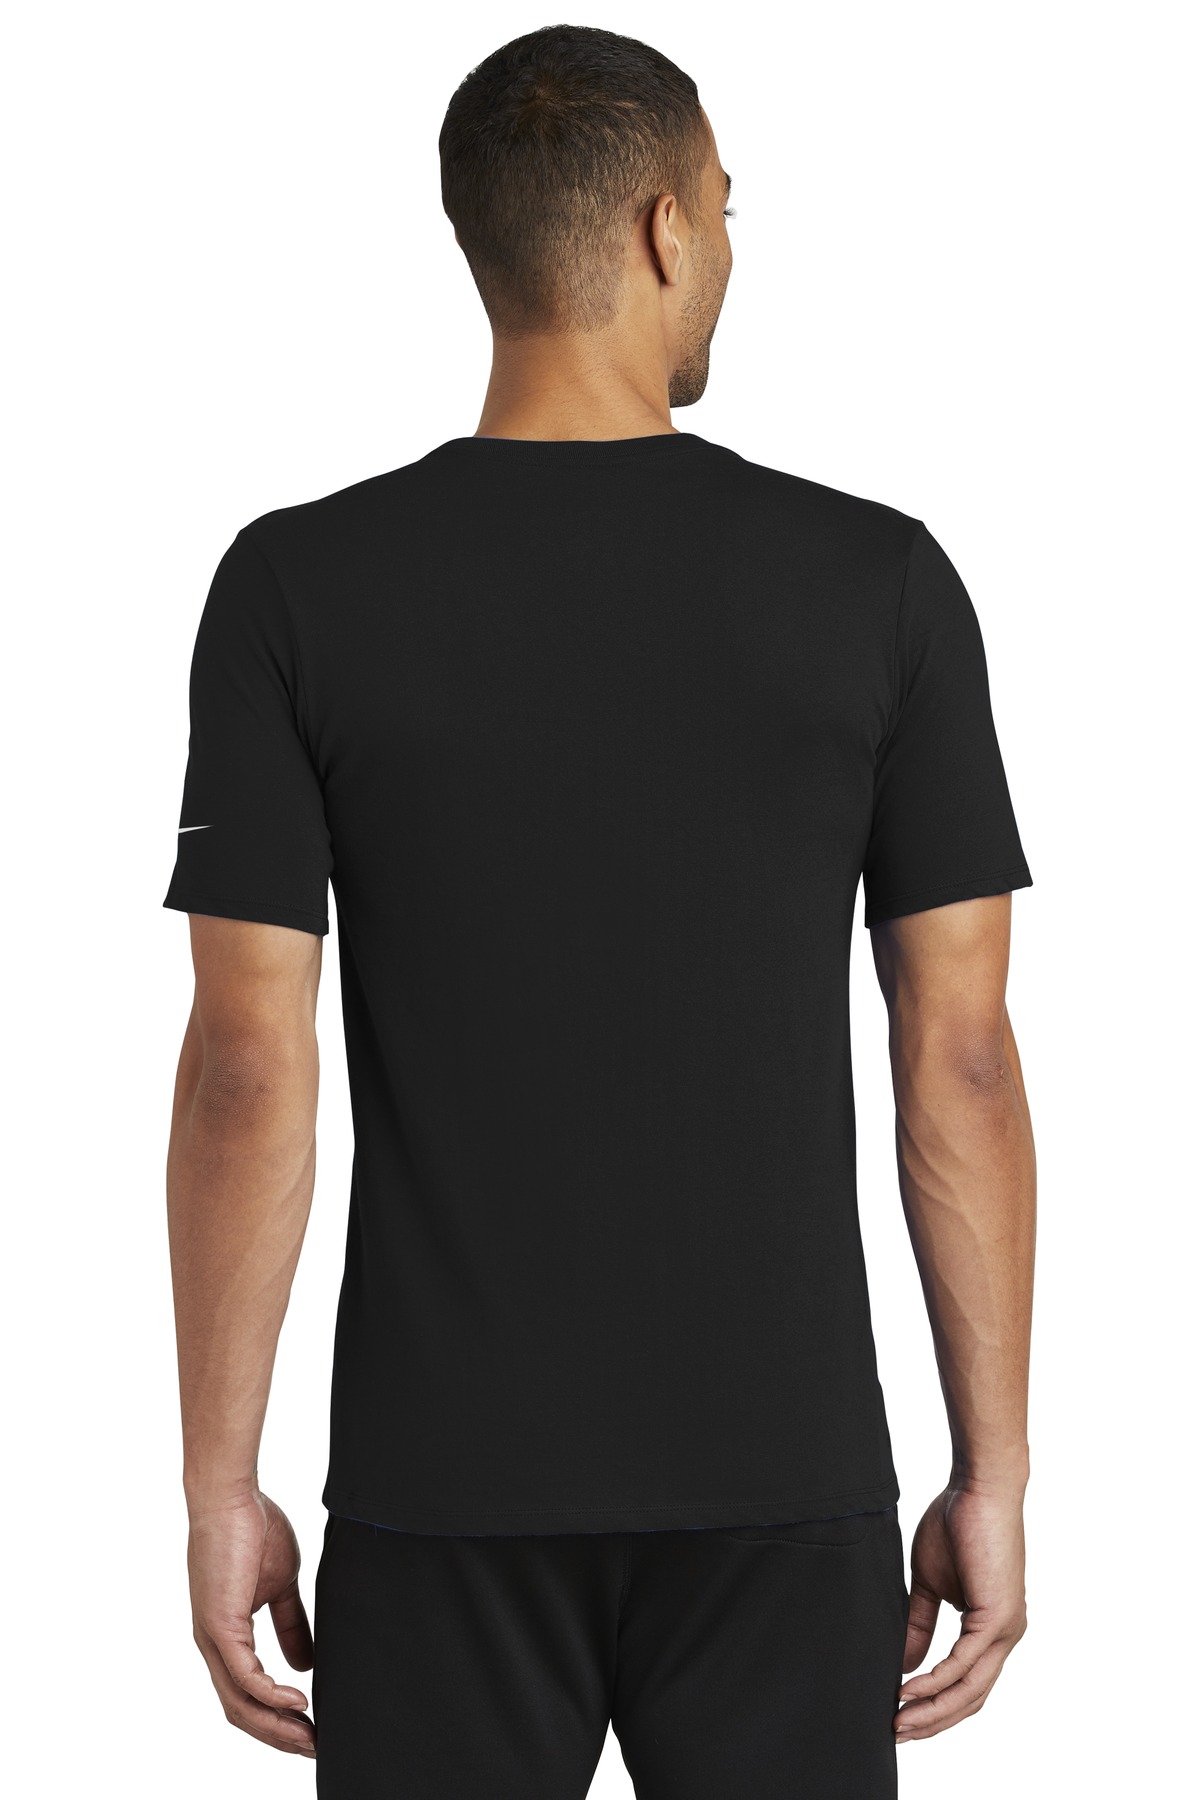 Nike Dri-FIT Cotton/Poly Tee. NKBQ5231 - Custom Shirt Shop